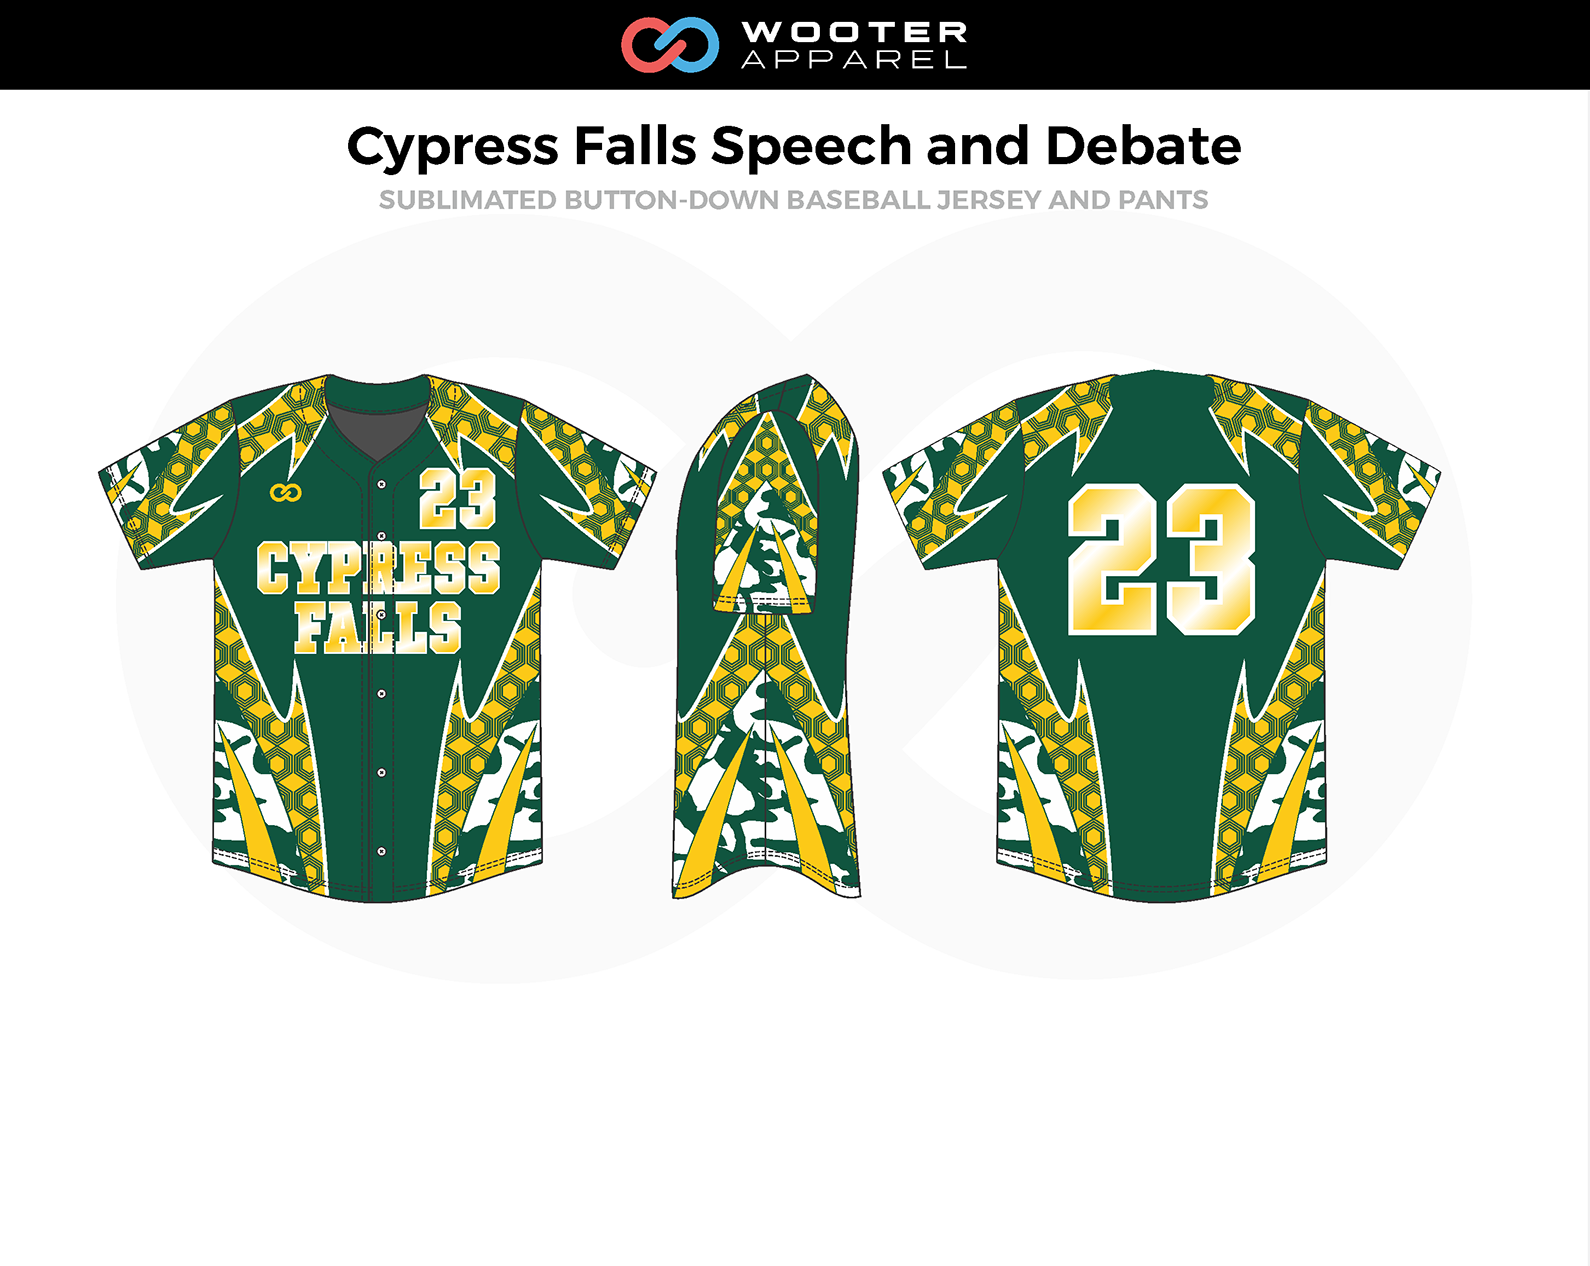 2018-09-10 Cypress Falls Speech and Debate 2.png